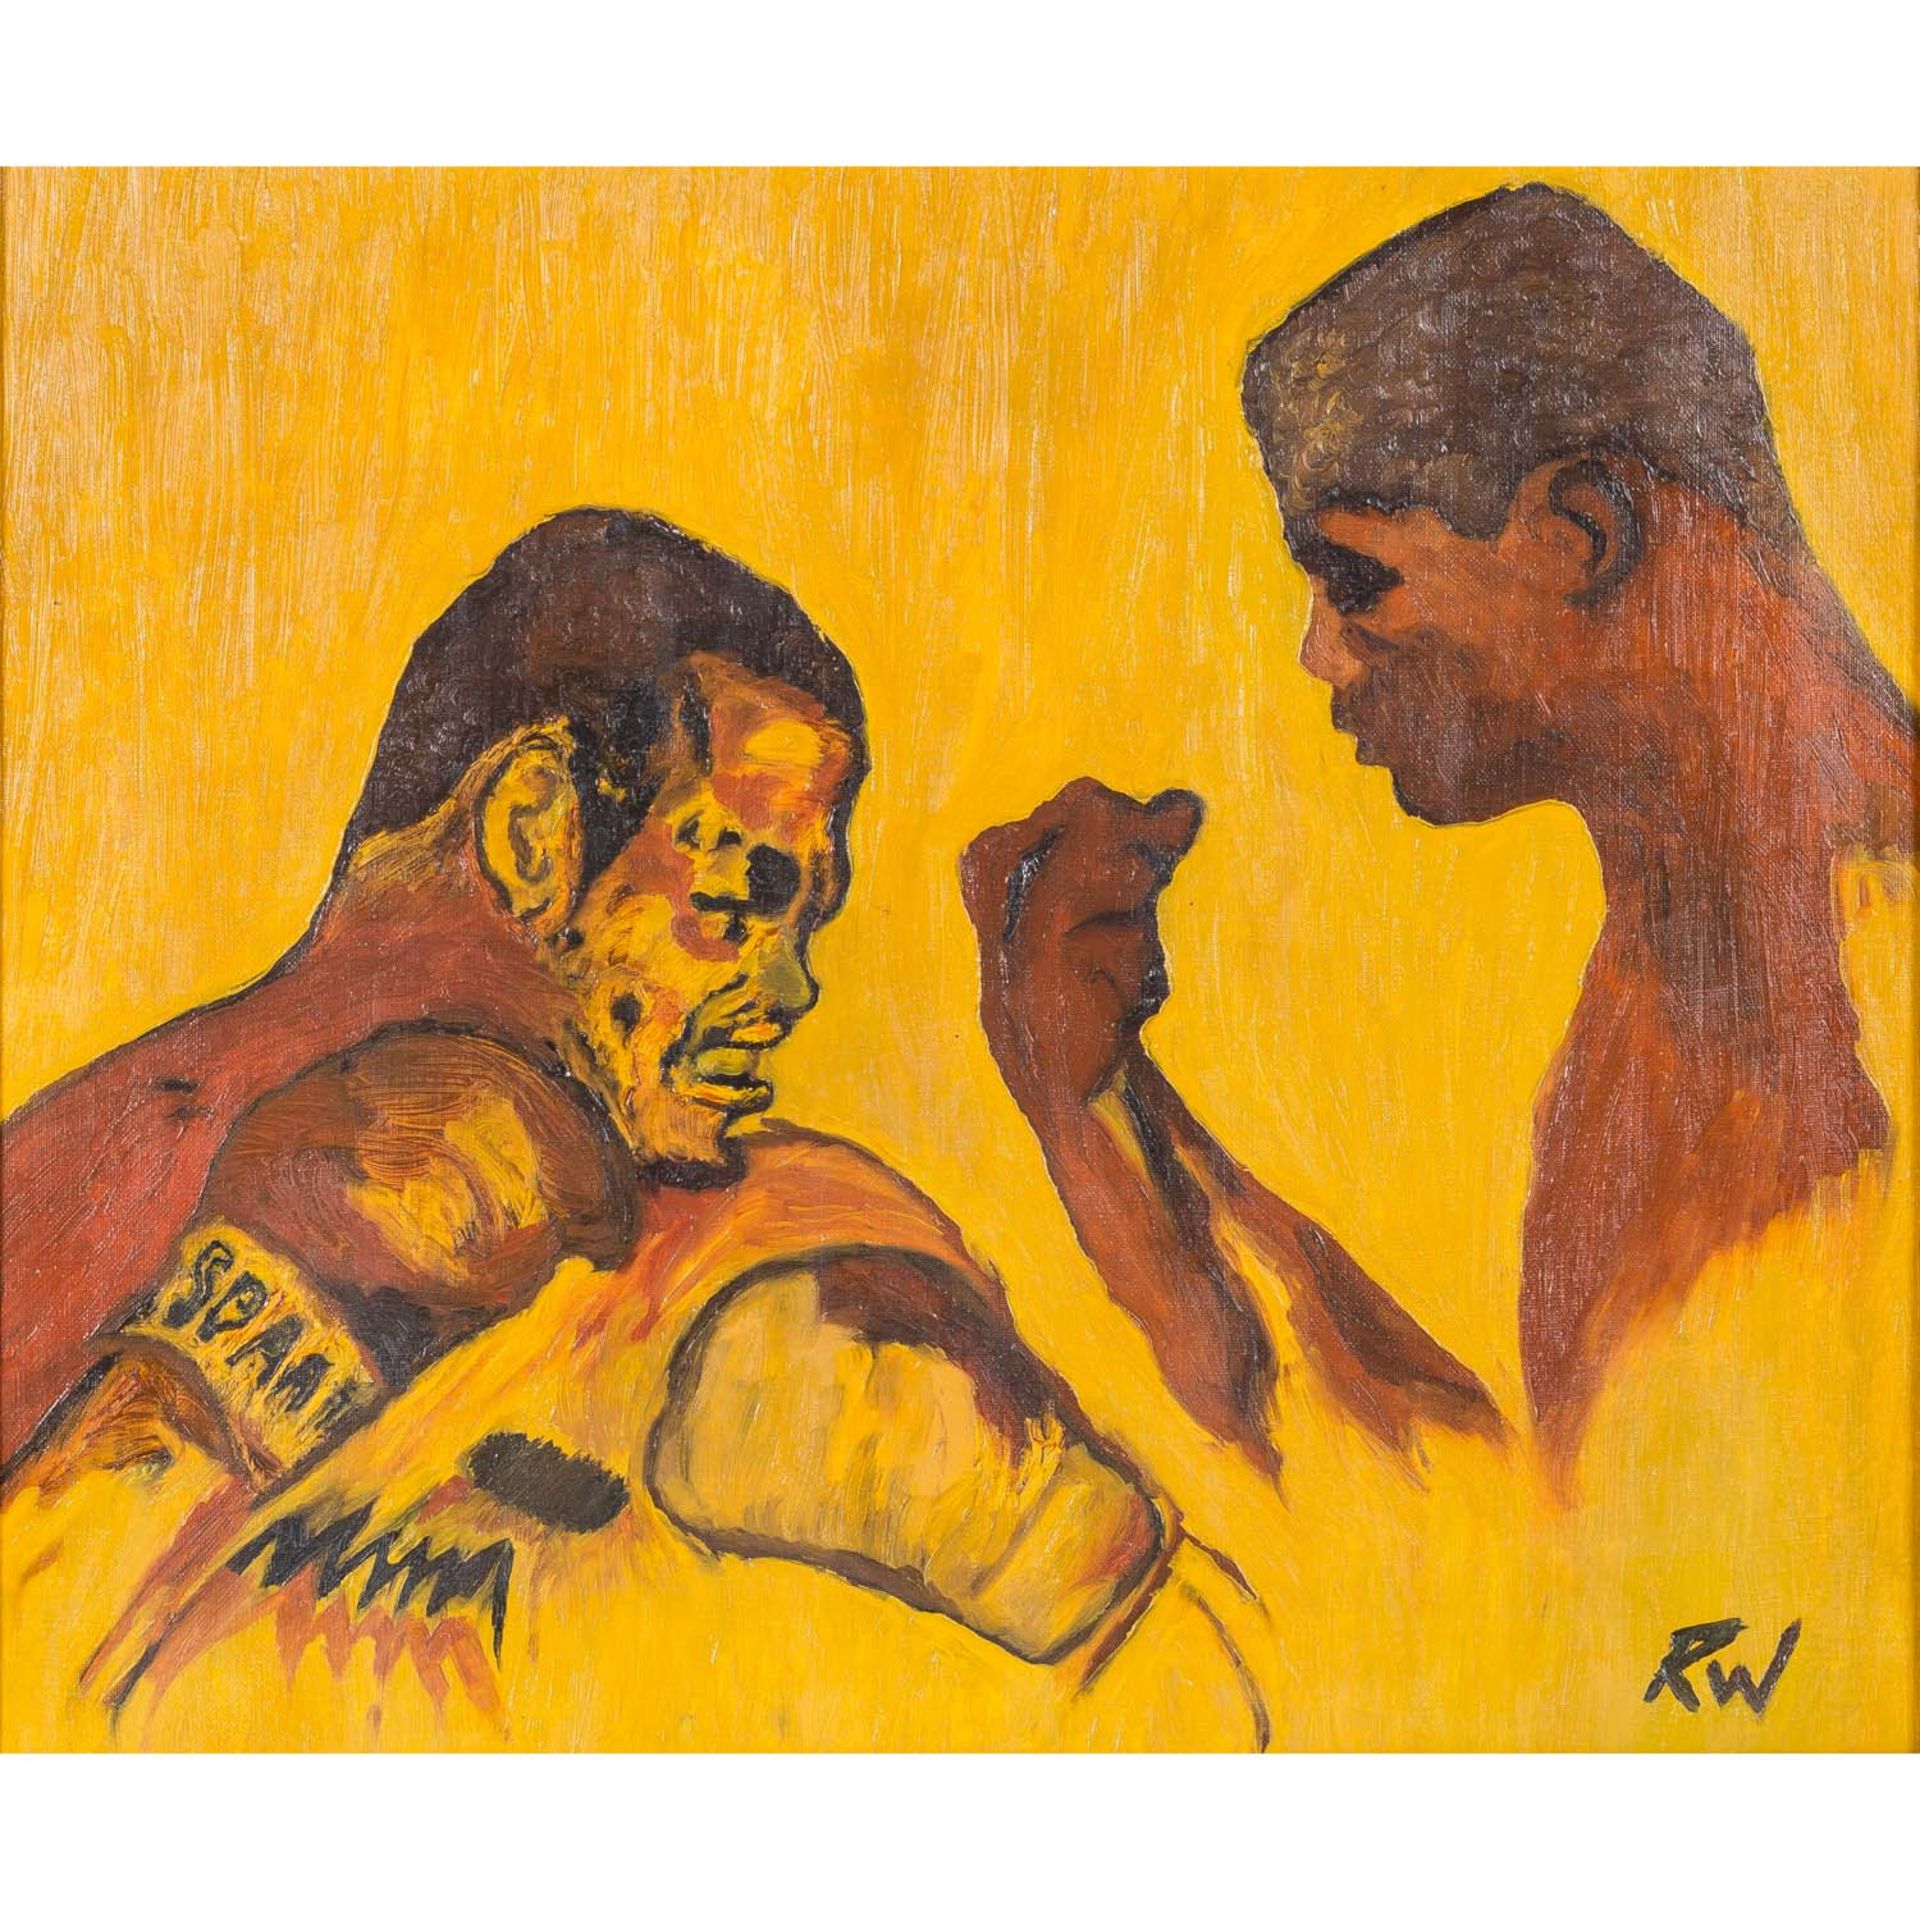 WELLER, RENÉ (geb. 1953, ehemaliger Boxchampion), "Boxkampf Muhammad Ali gegen Joe Frazier",